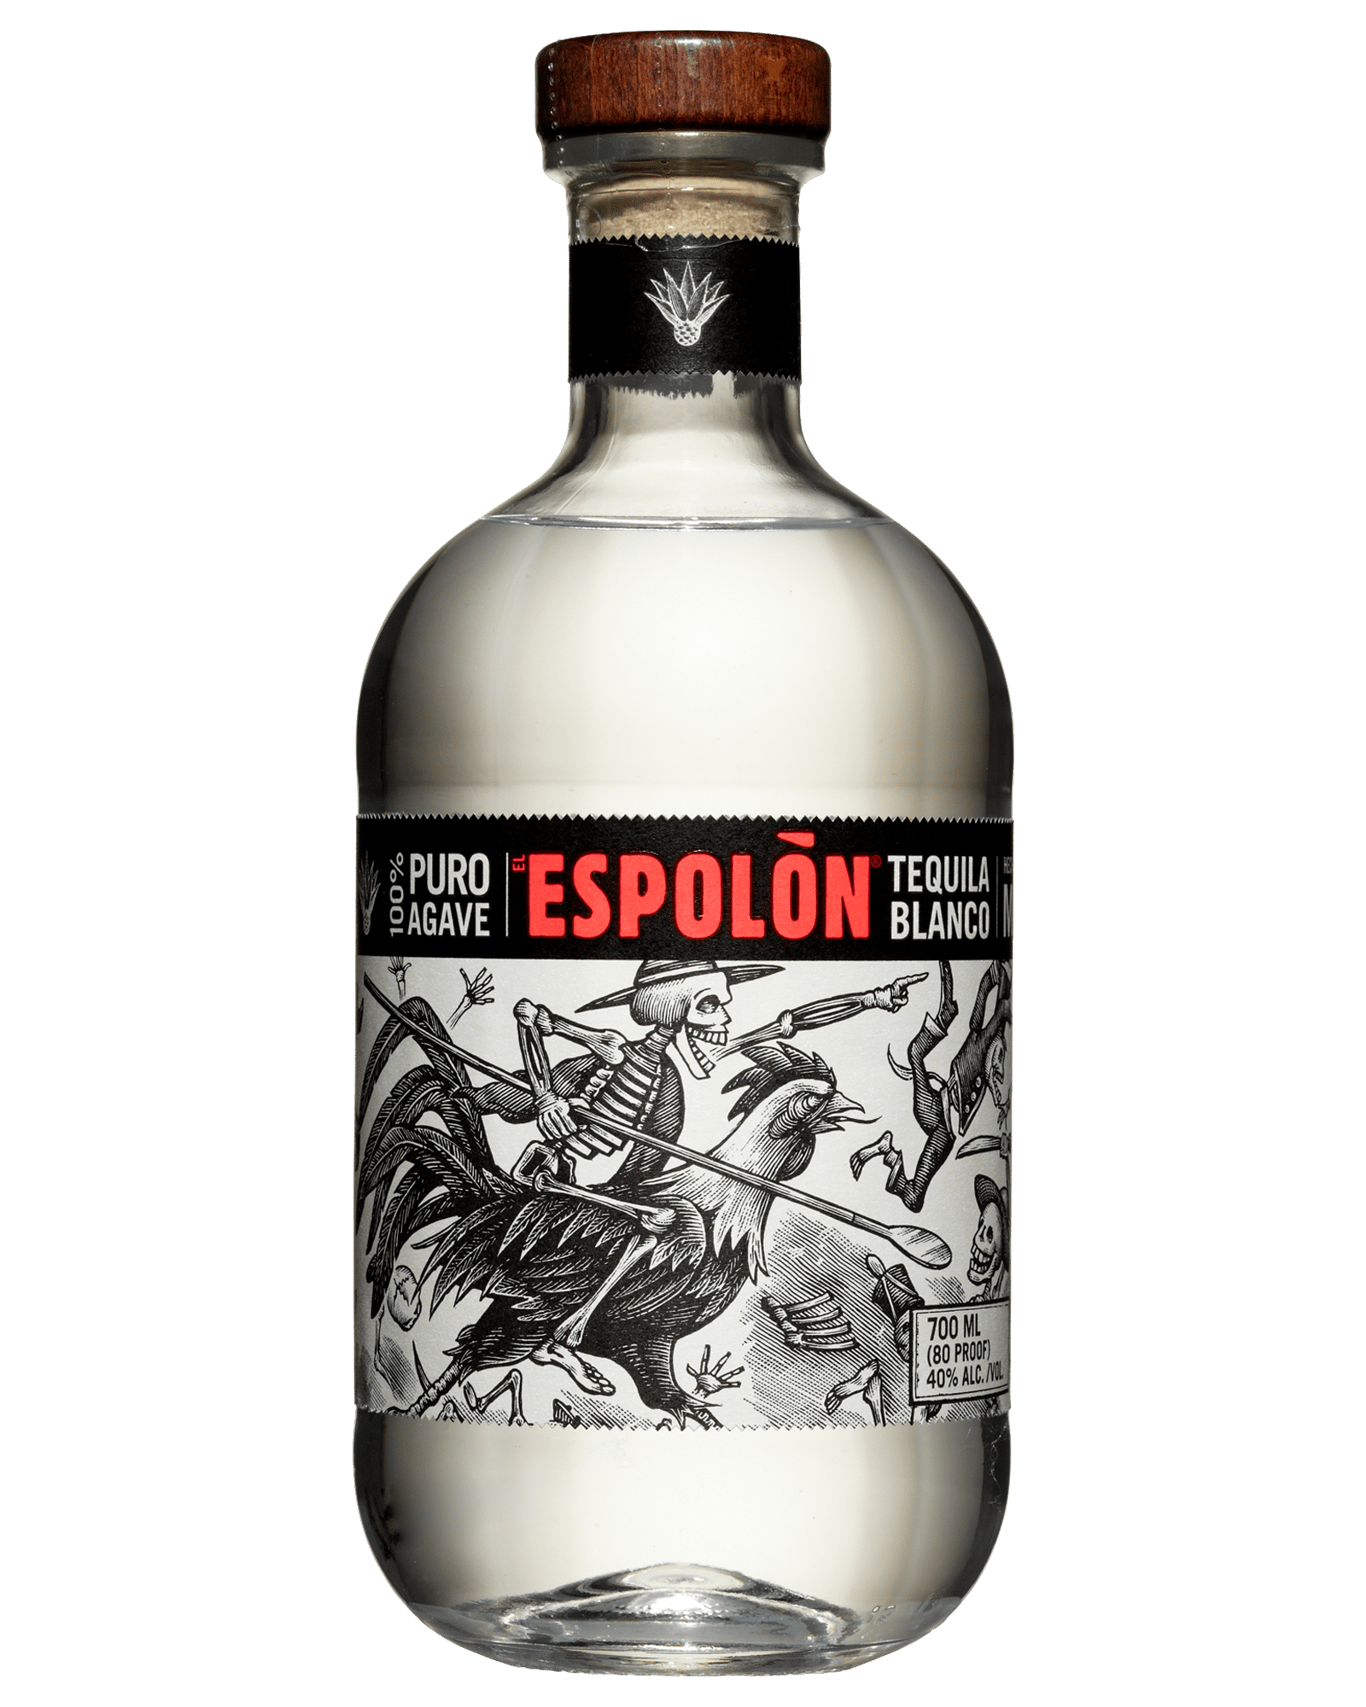 Buy Espolon Tequila Blanco 700ml Online (Lowest Price Guarantee): Best ...